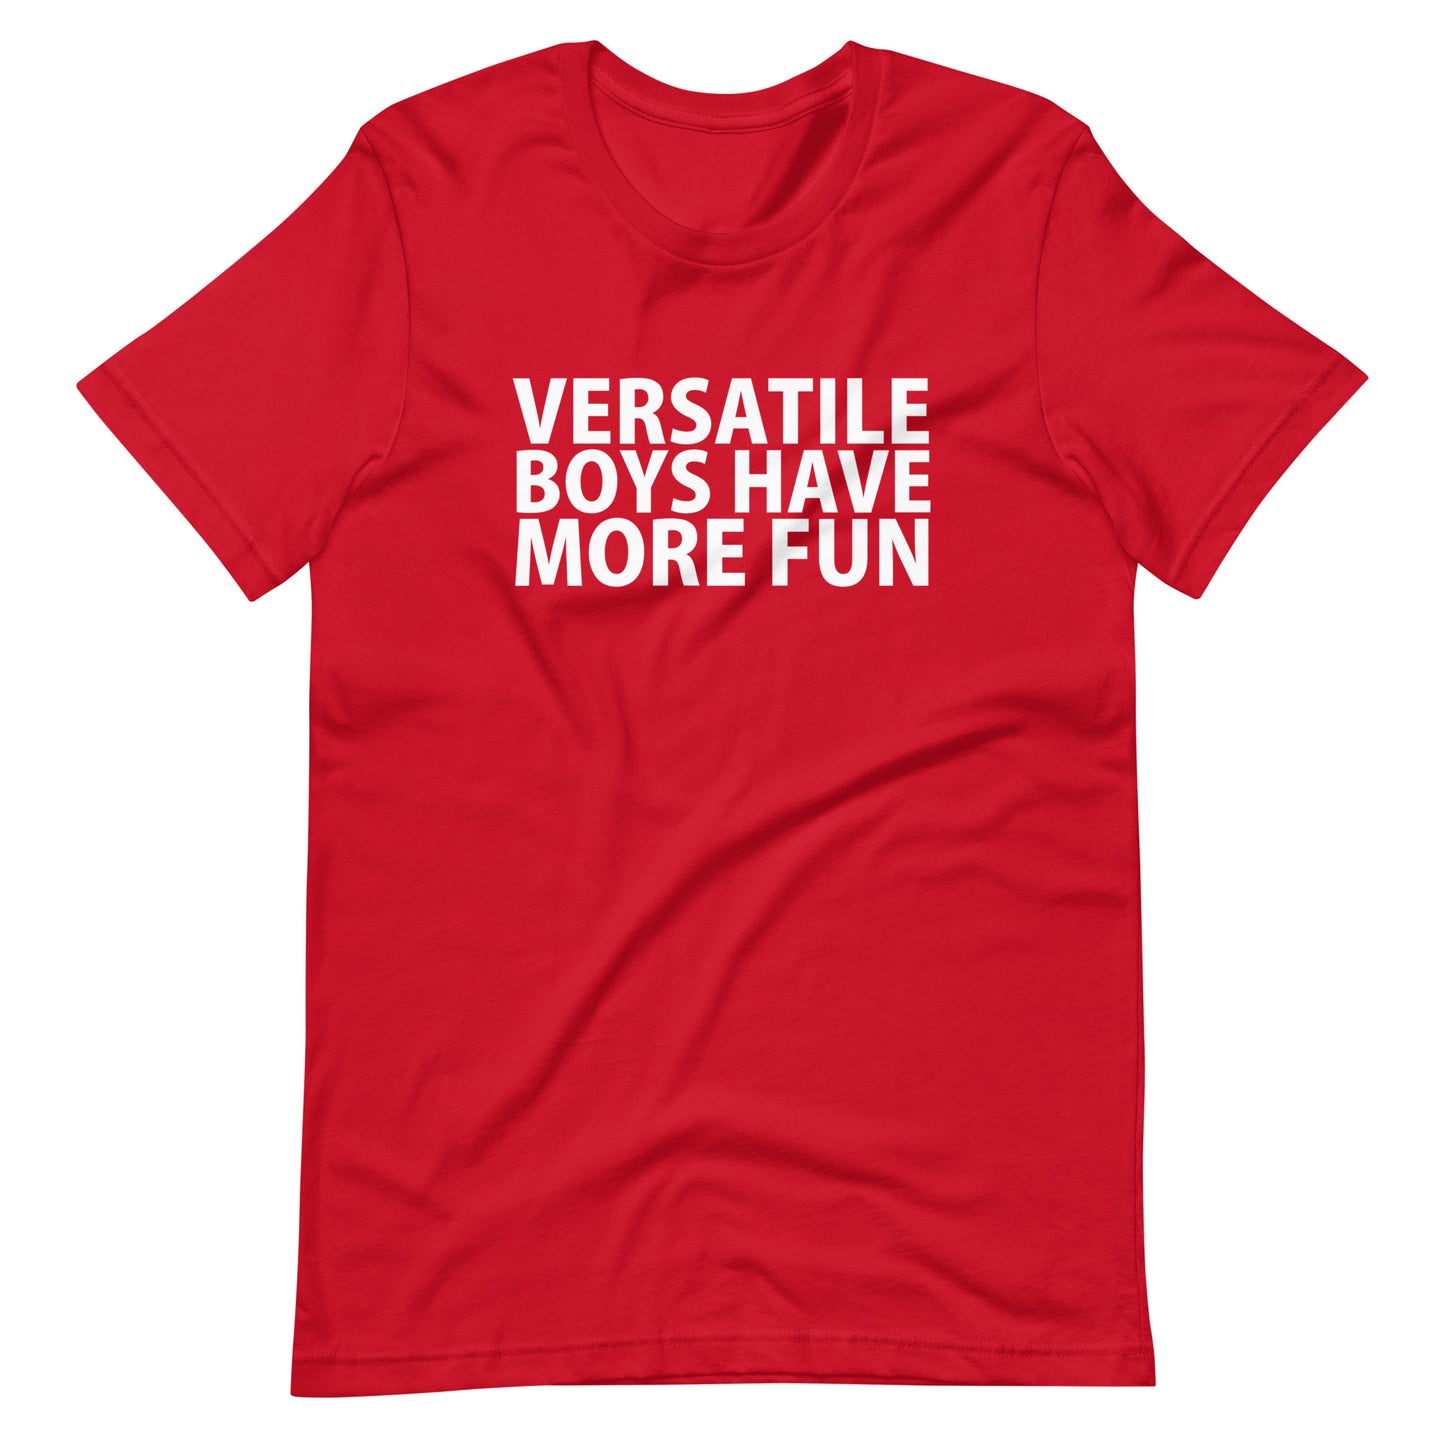 Versatile Boys Have Move Fun T-Shirt - Red